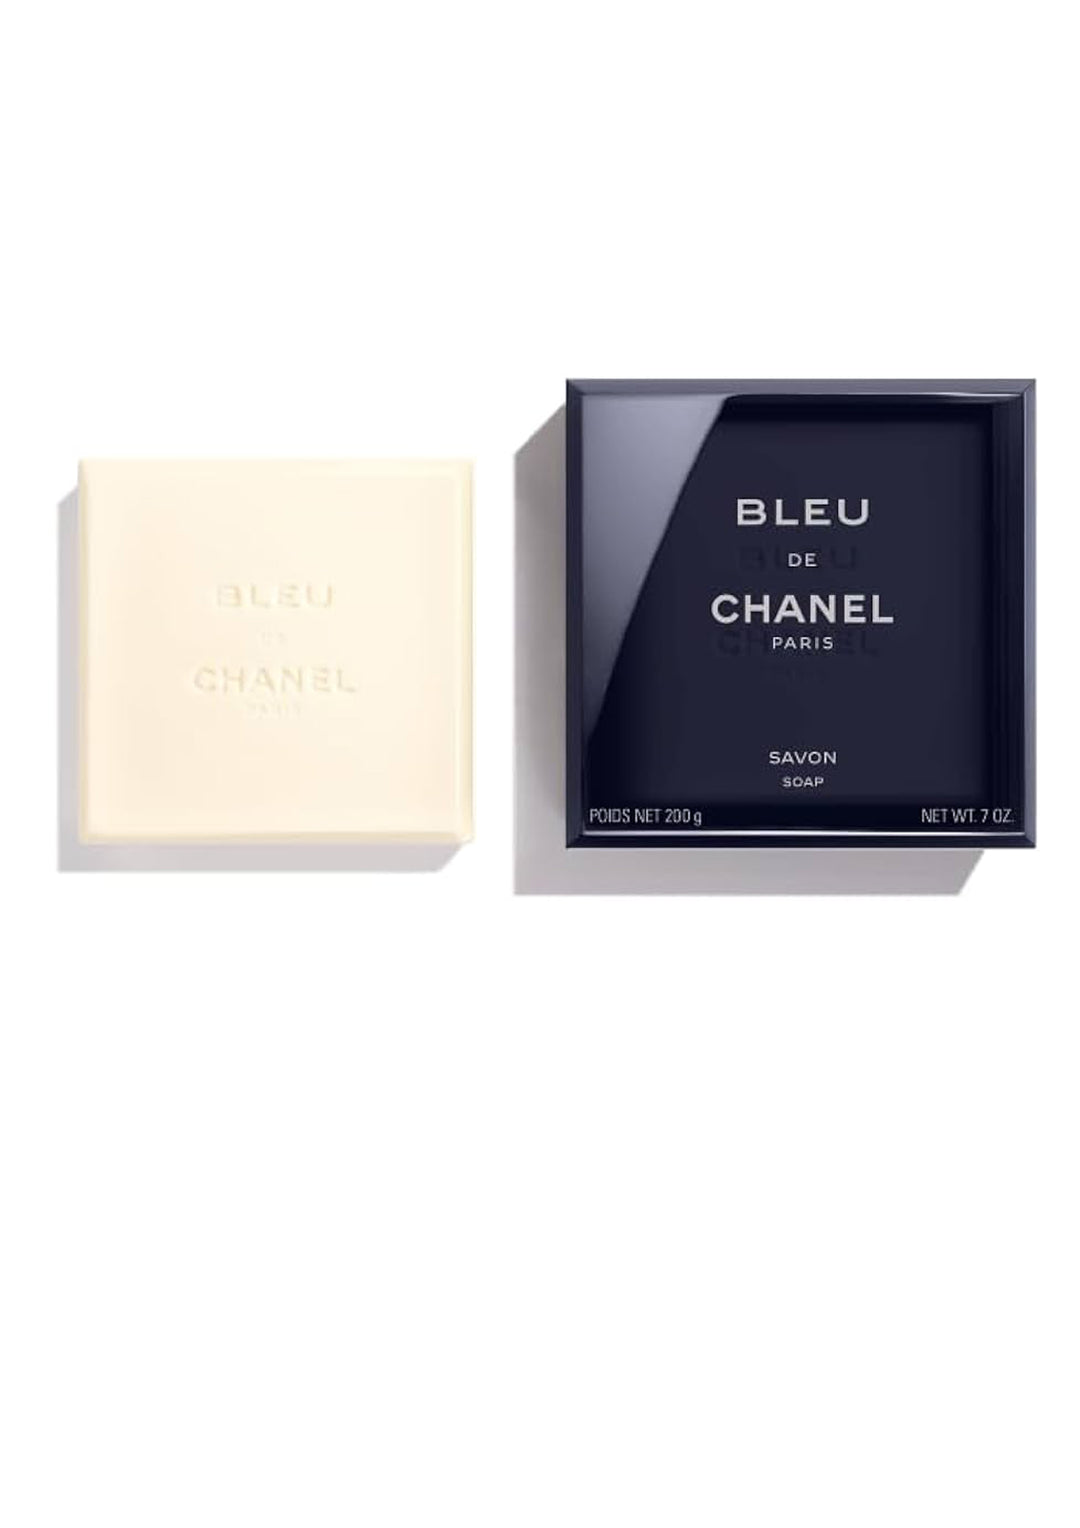 Chanel Bleu De Chanel Soap 200g